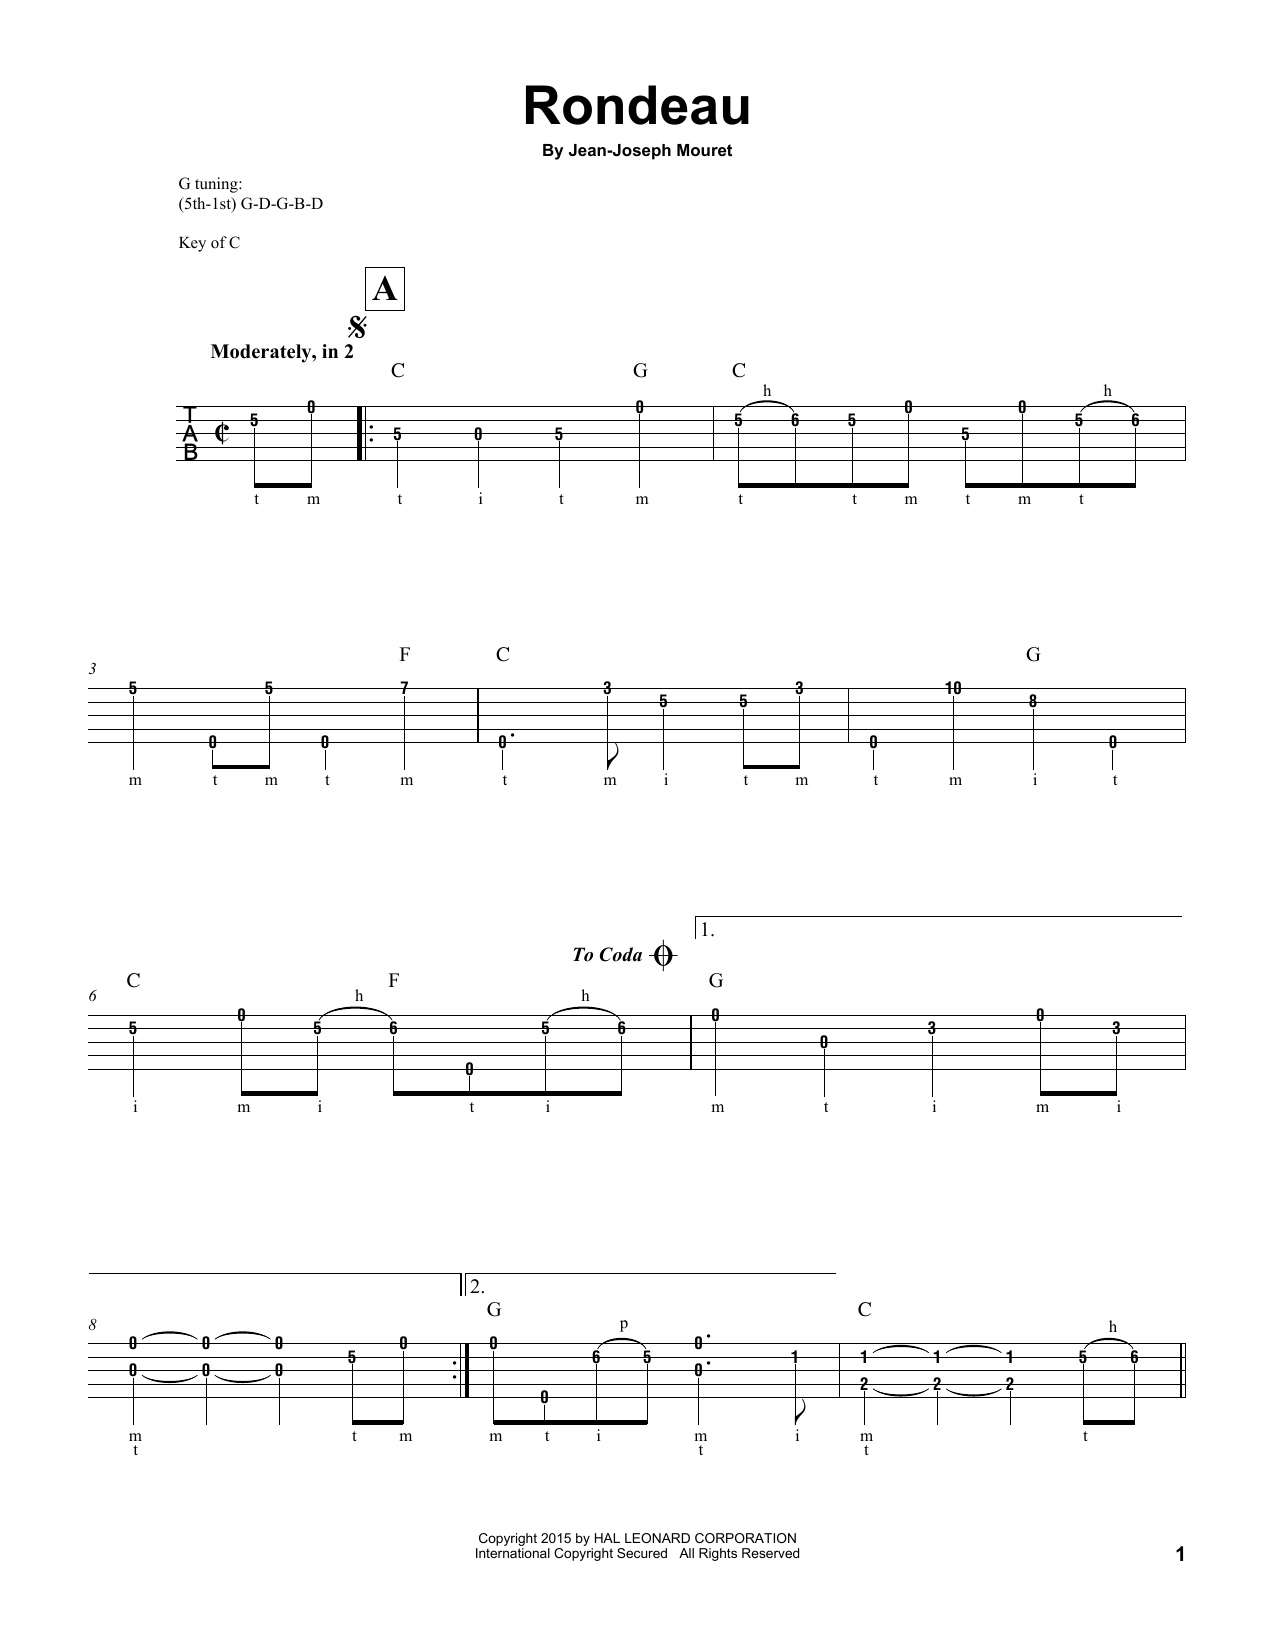 Jean-Joseph Mouret Fanfare Rondeau Sheet Music Notes & Chords for Flute Duet - Download or Print PDF